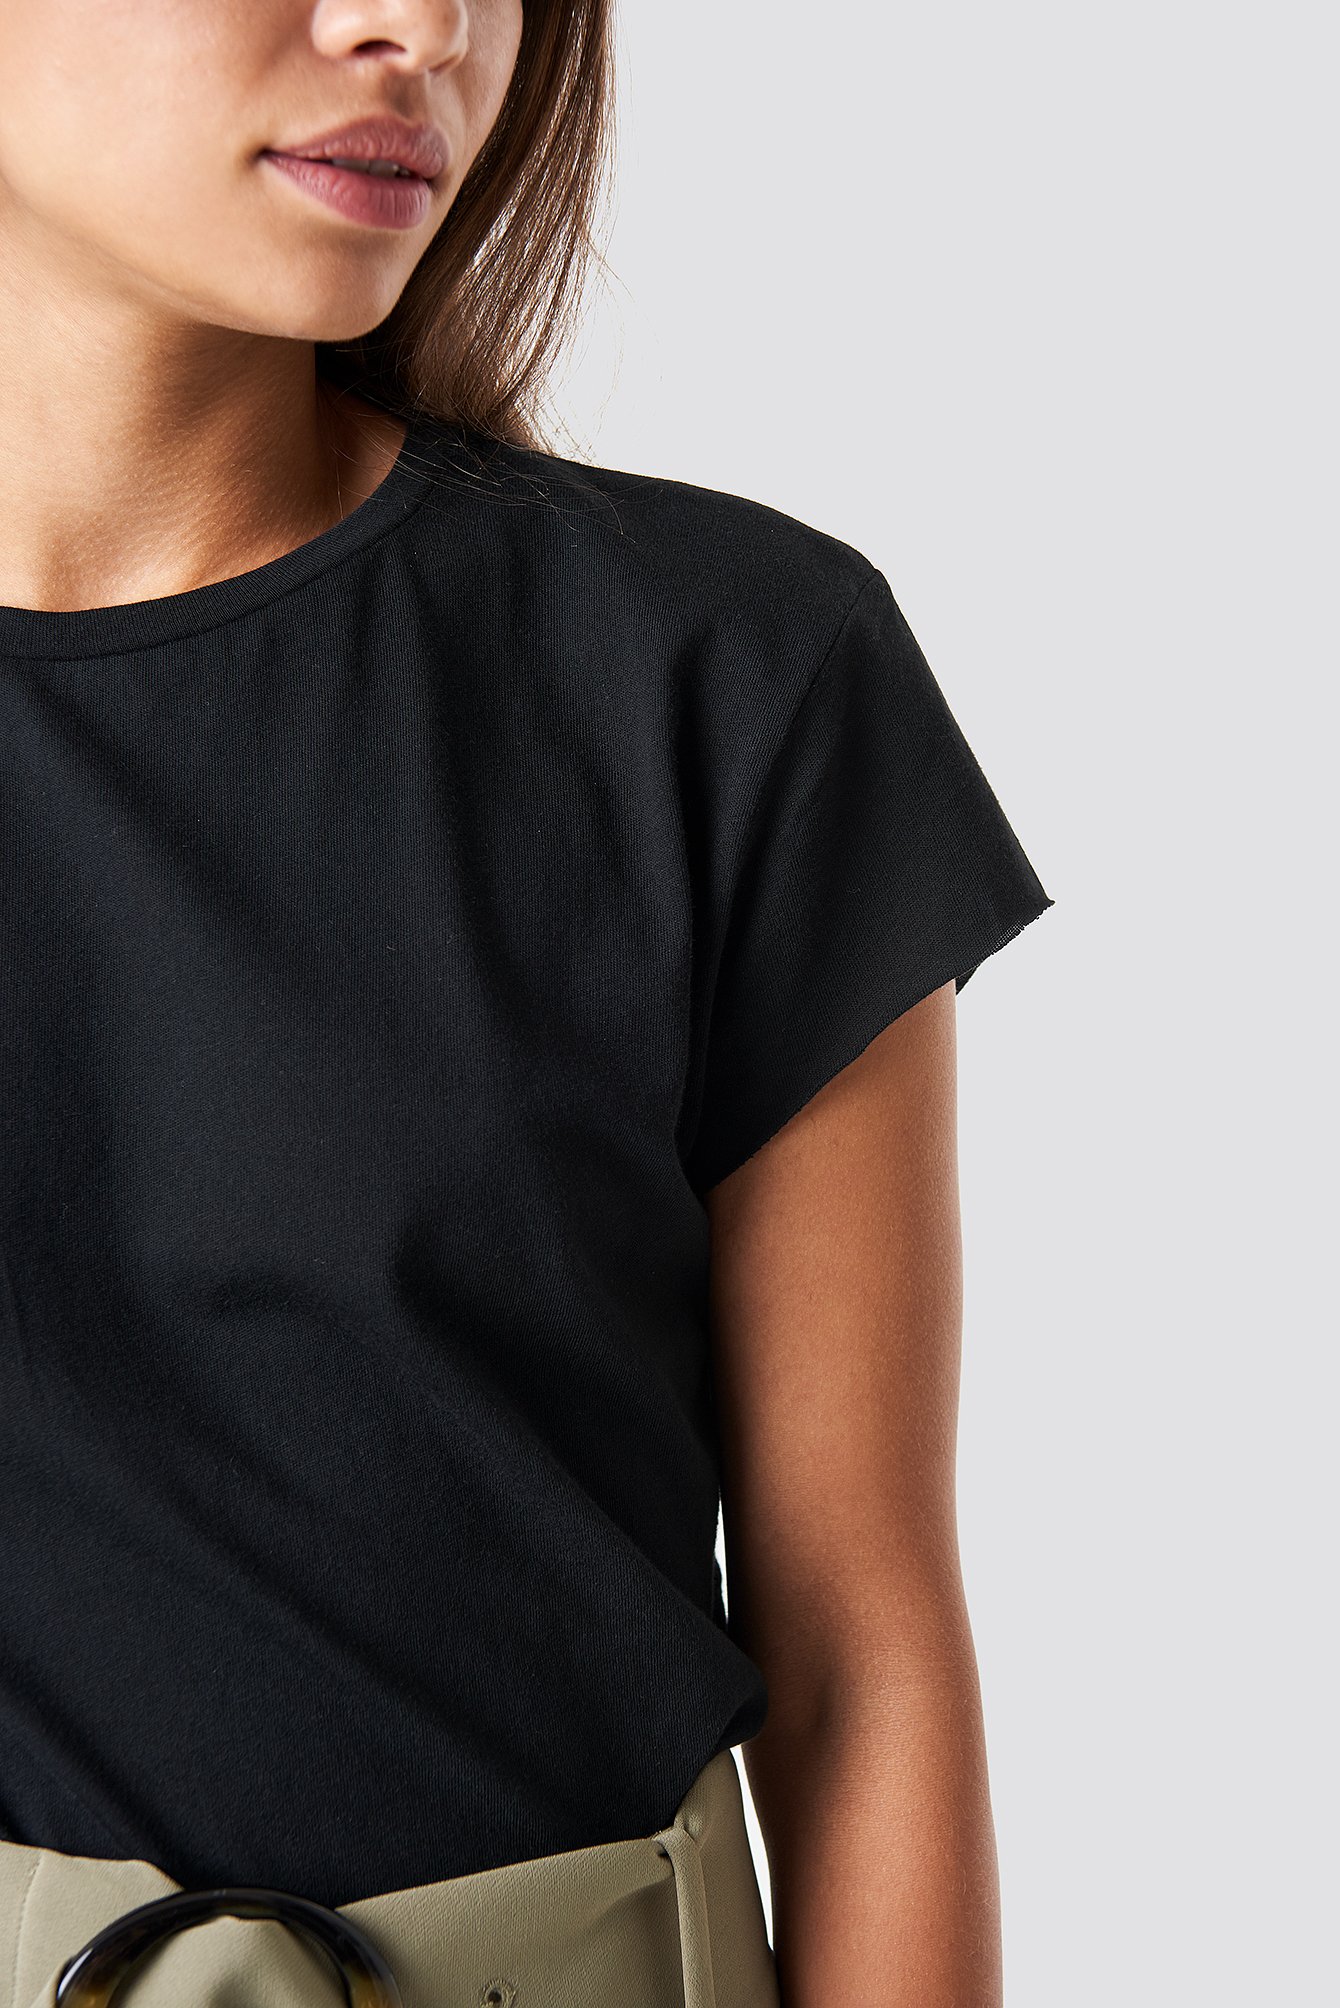 Black T-Shirt Bez Obszycia